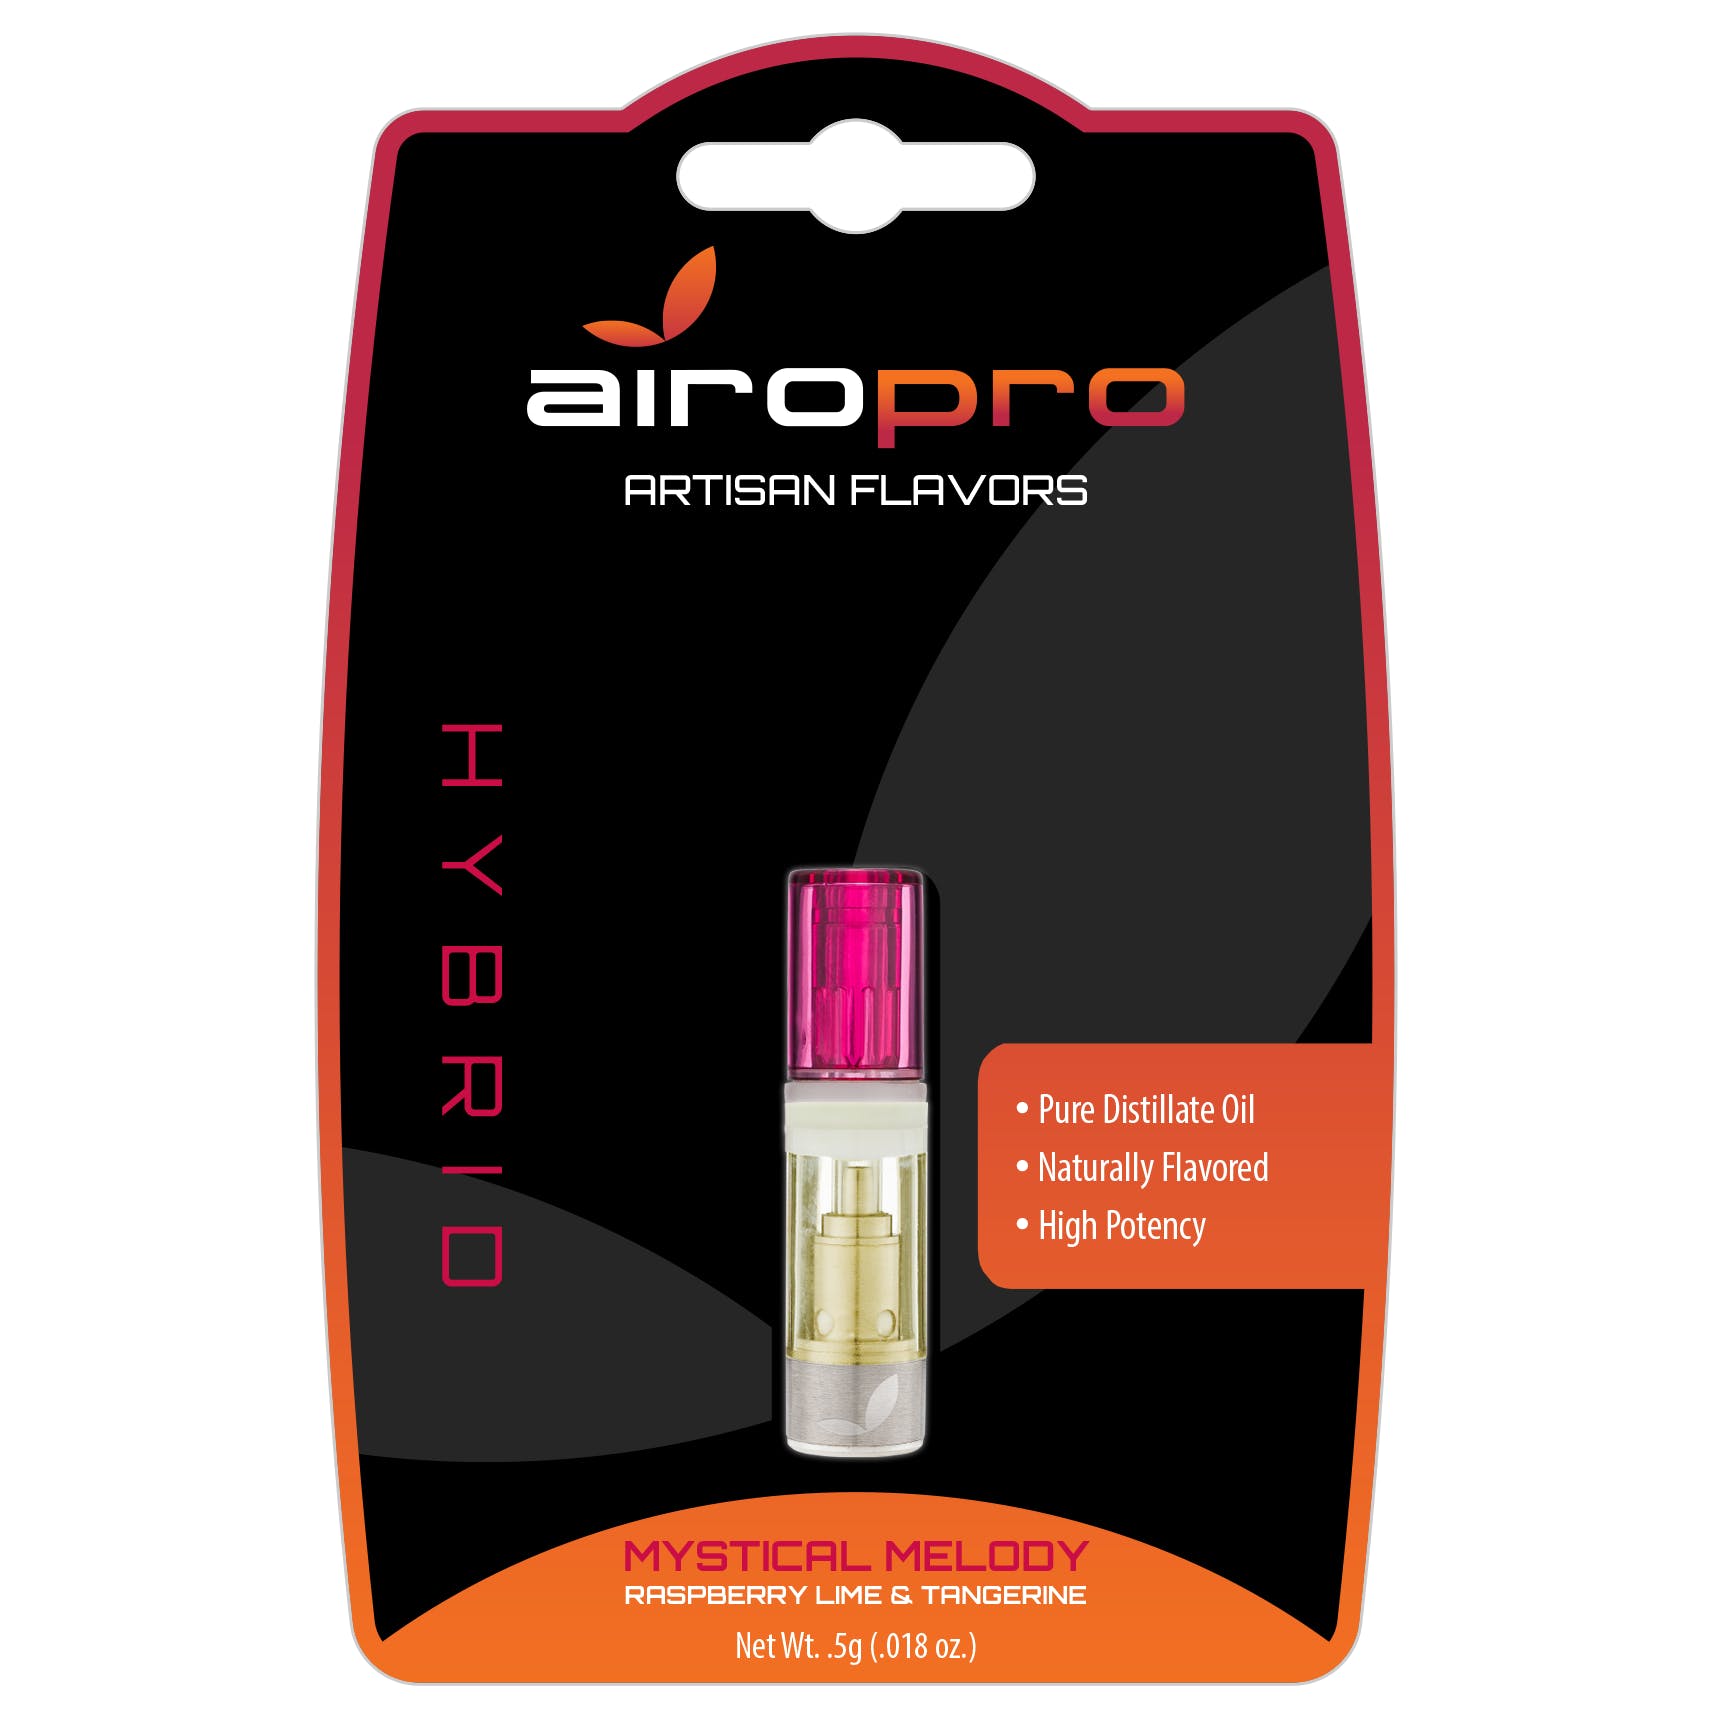 AiroPro - Mystical Melody - Hybrid - .5g